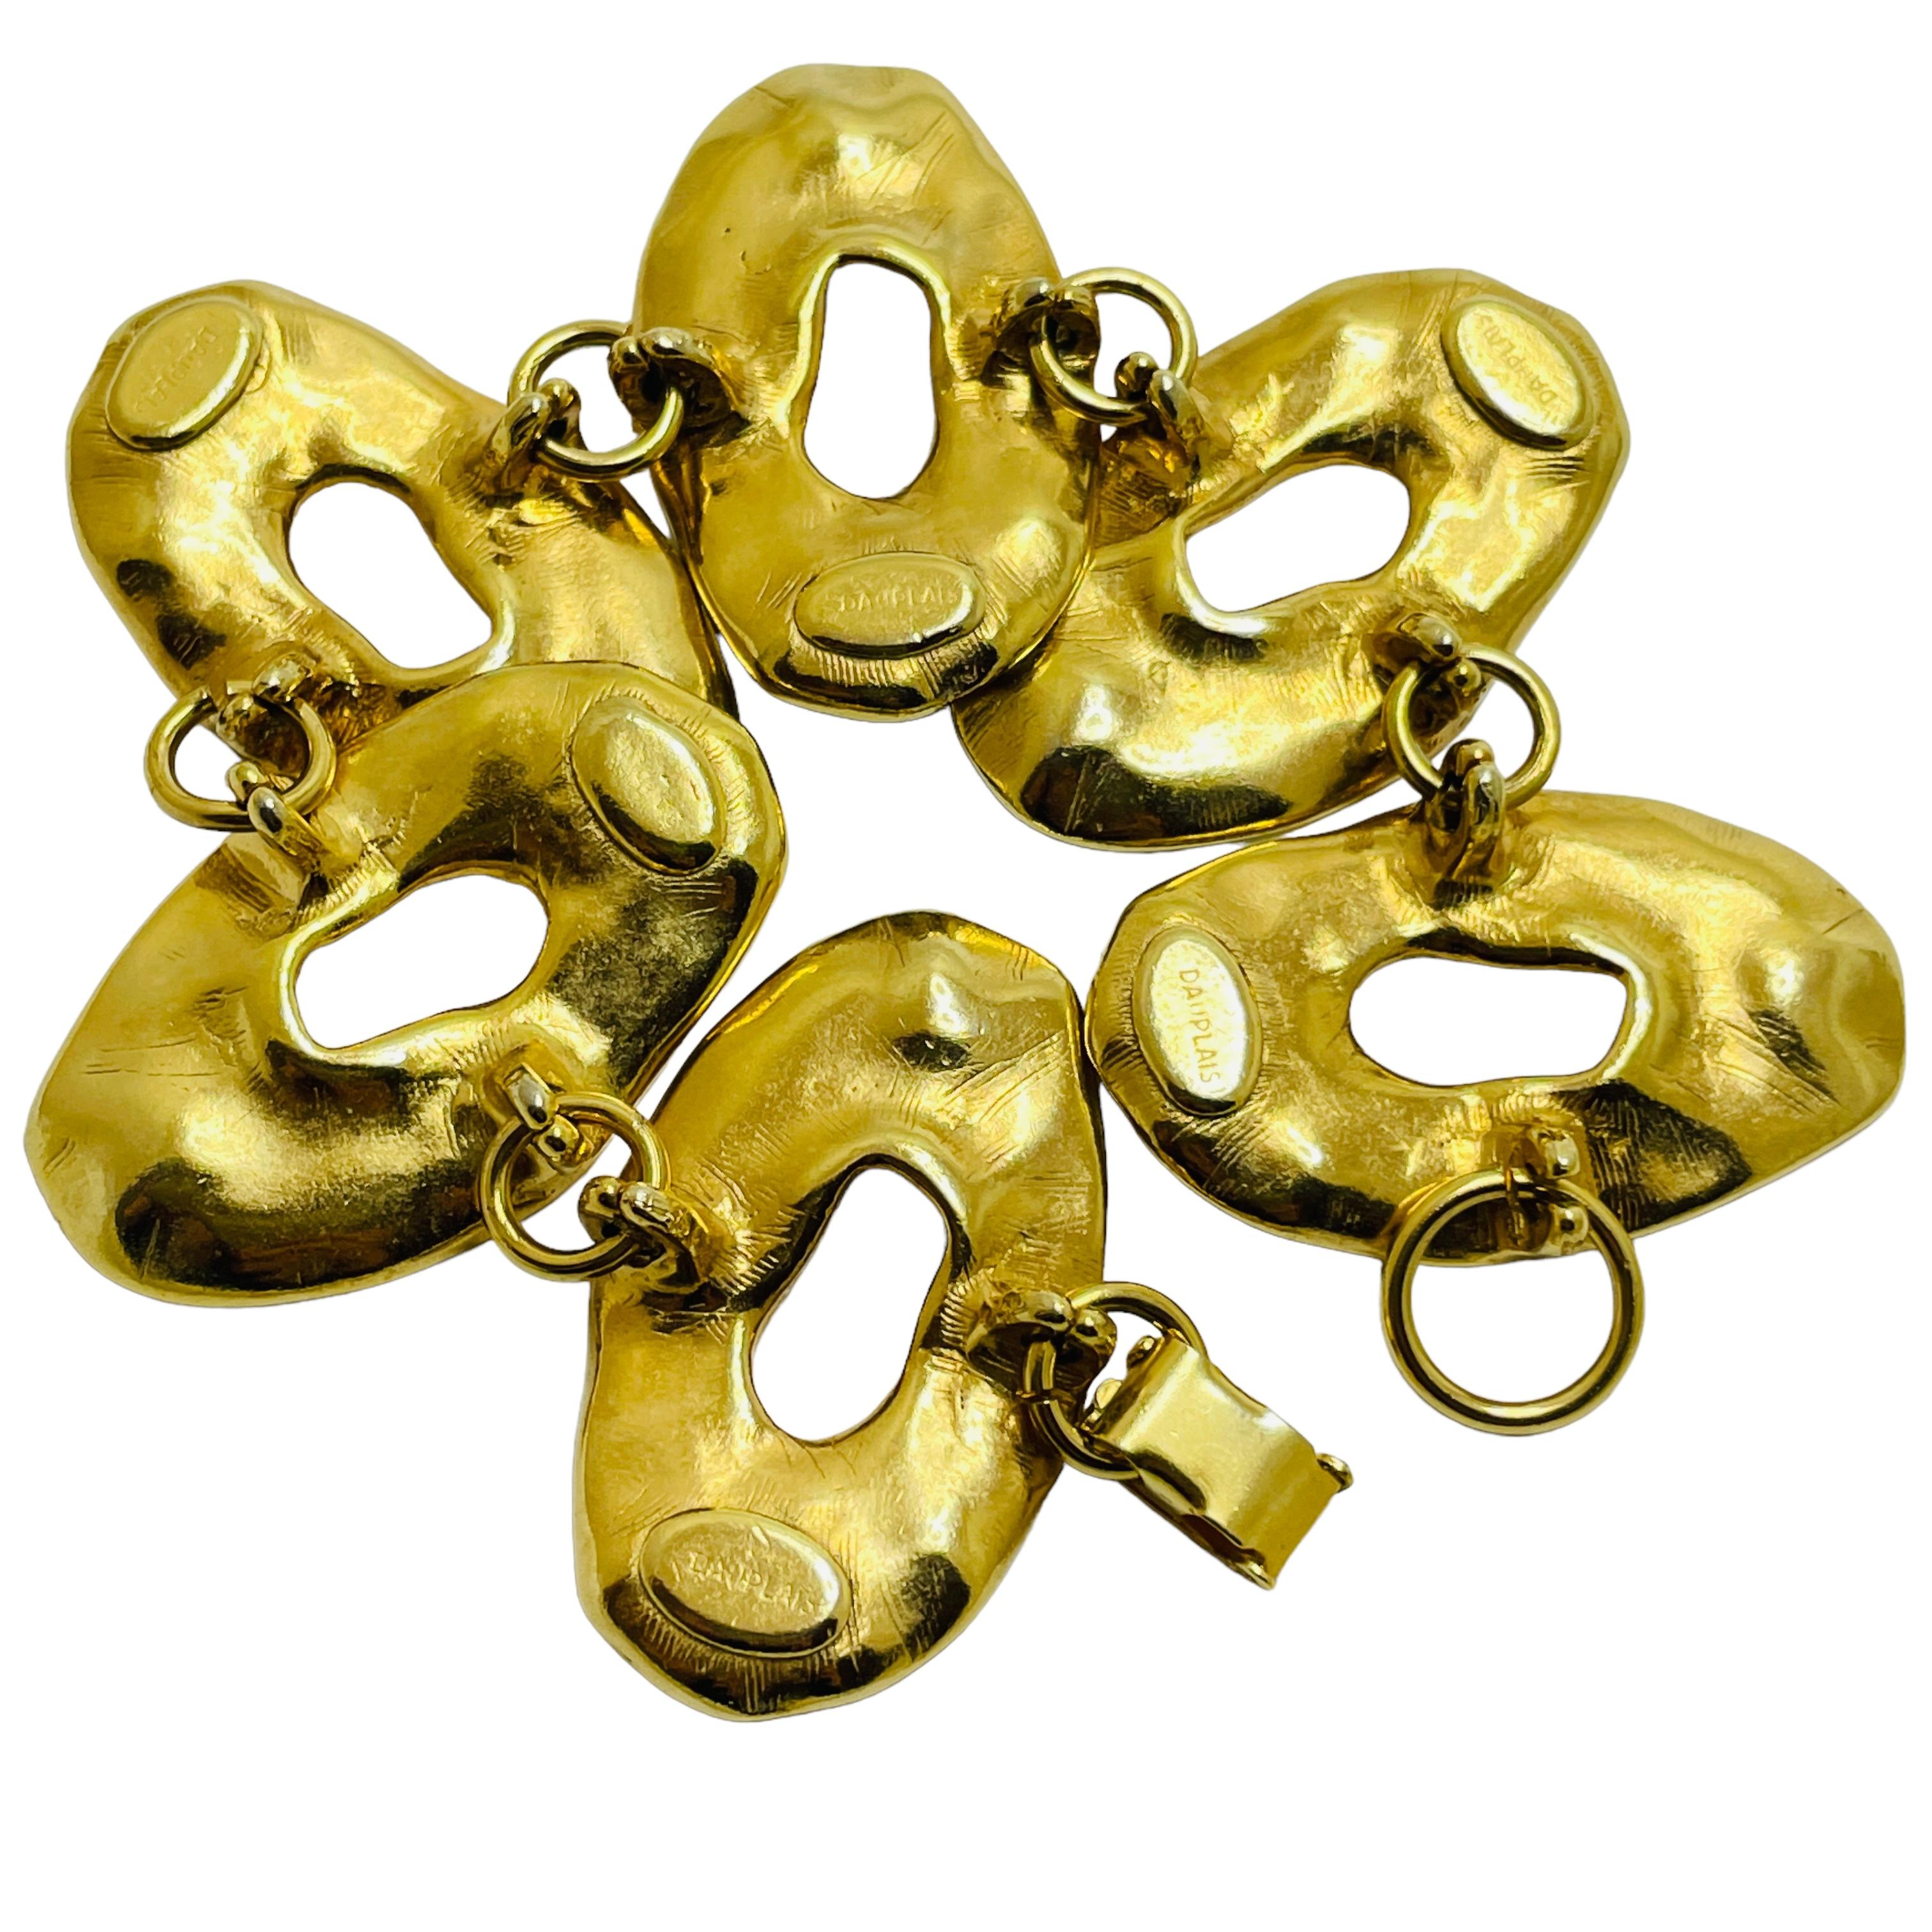 DAUPLAISE vintage gold modernist link designer runway bracelet In Good Condition For Sale In Palos Hills, IL